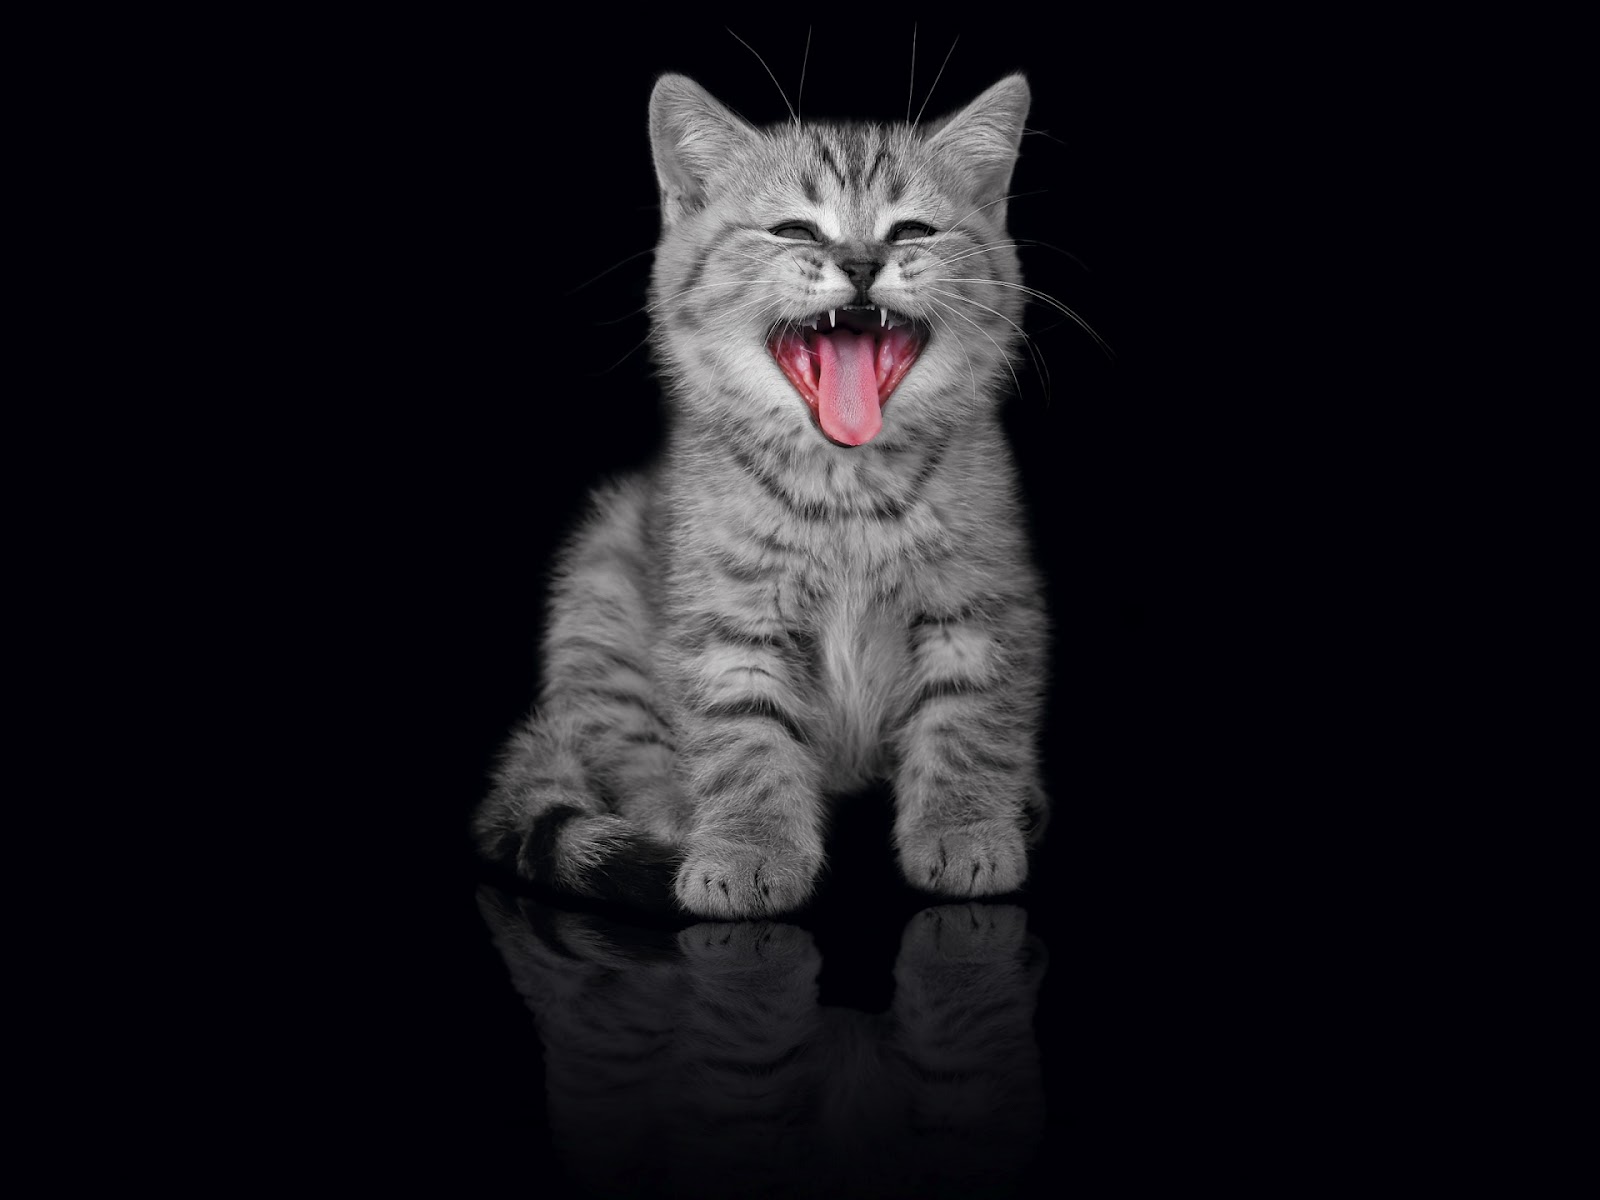  little cats Grey kitten with black background wallpaper 1920x1440 1600x1200